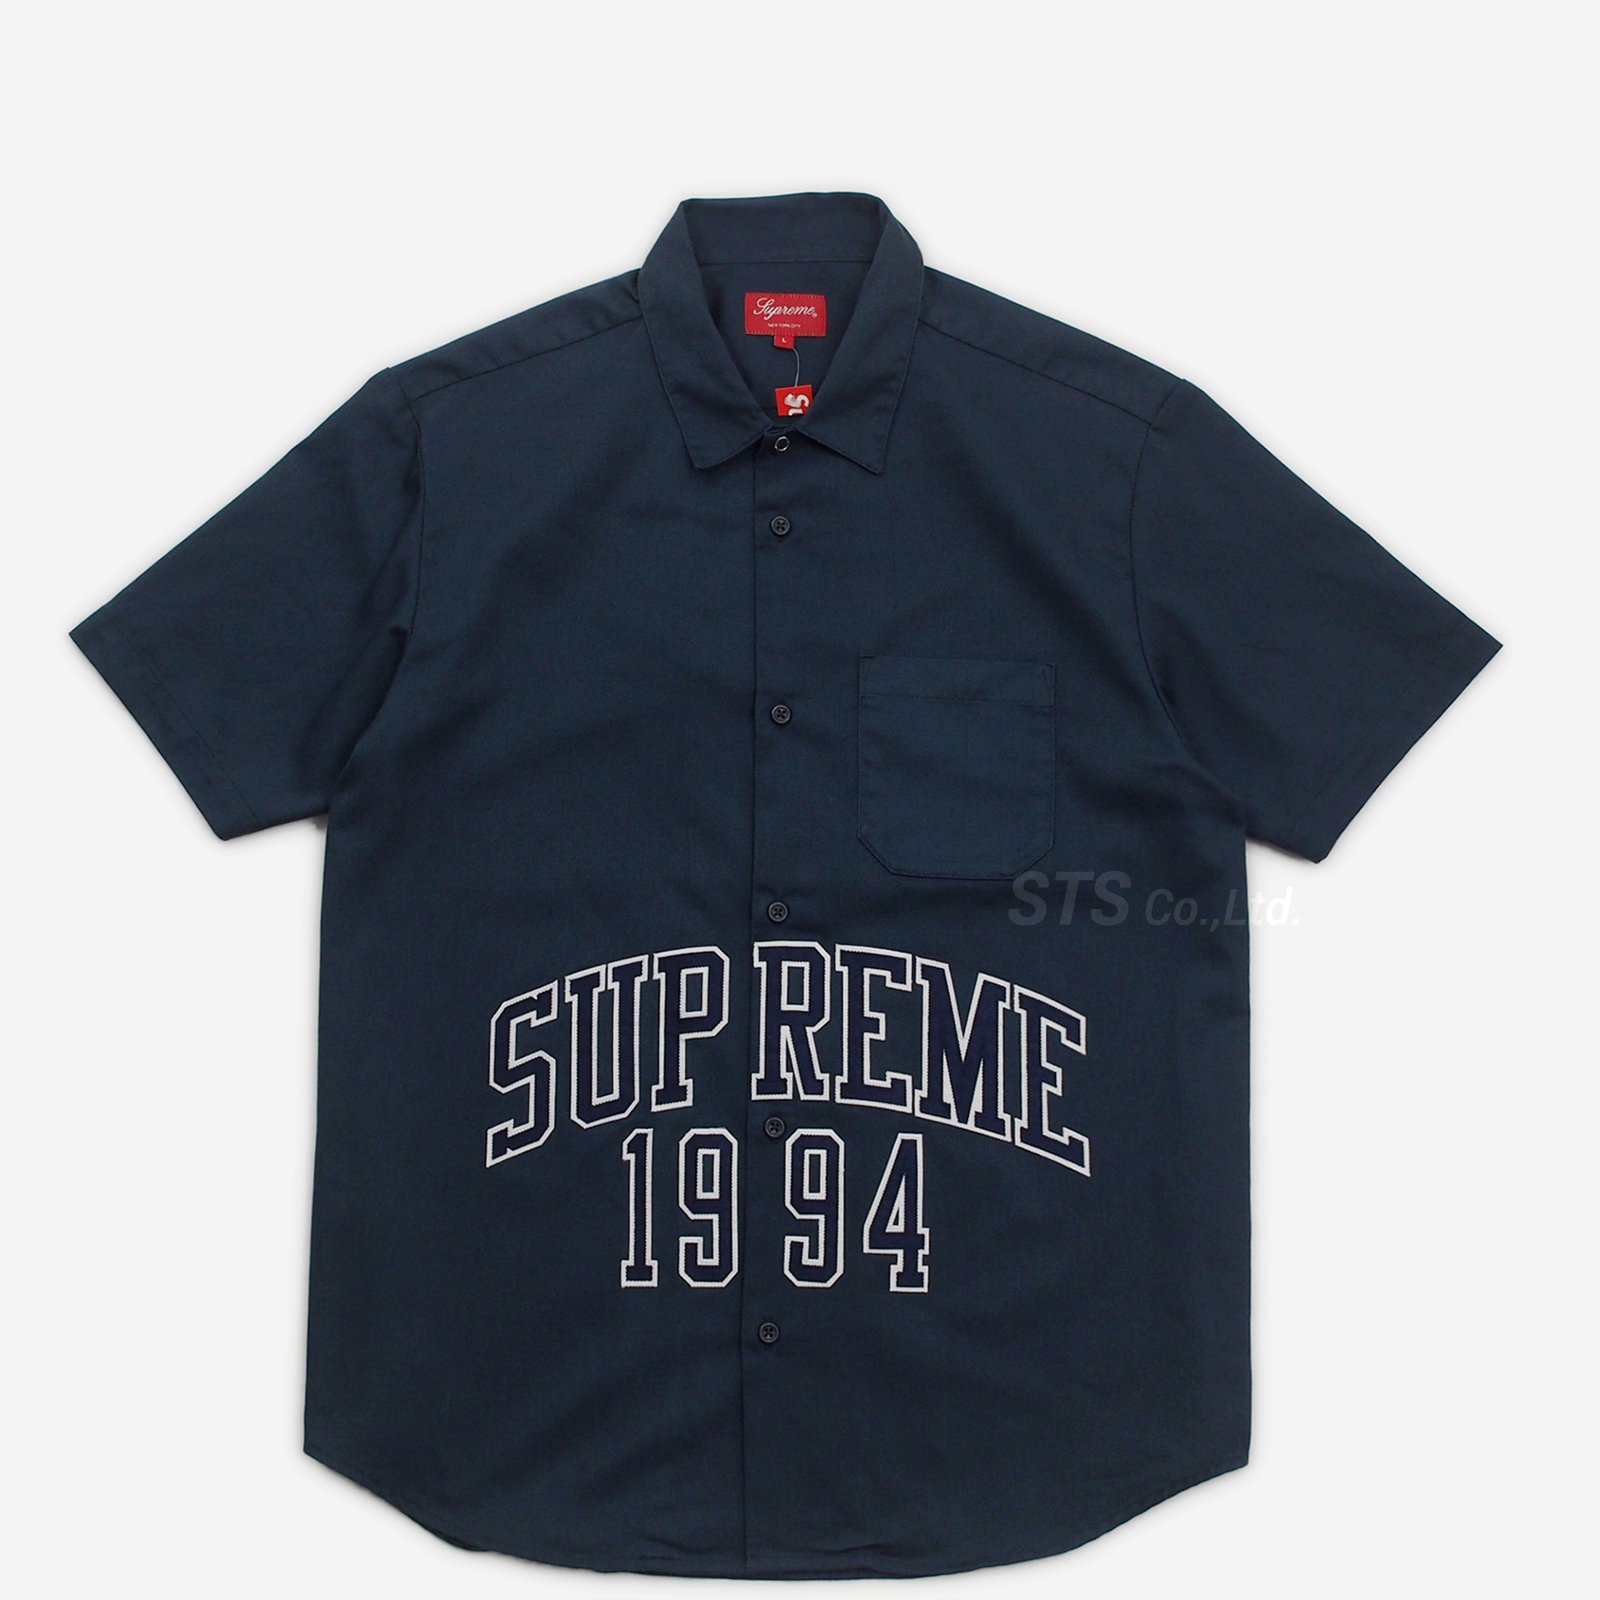 Supreme Arc logo S/S work shirt L